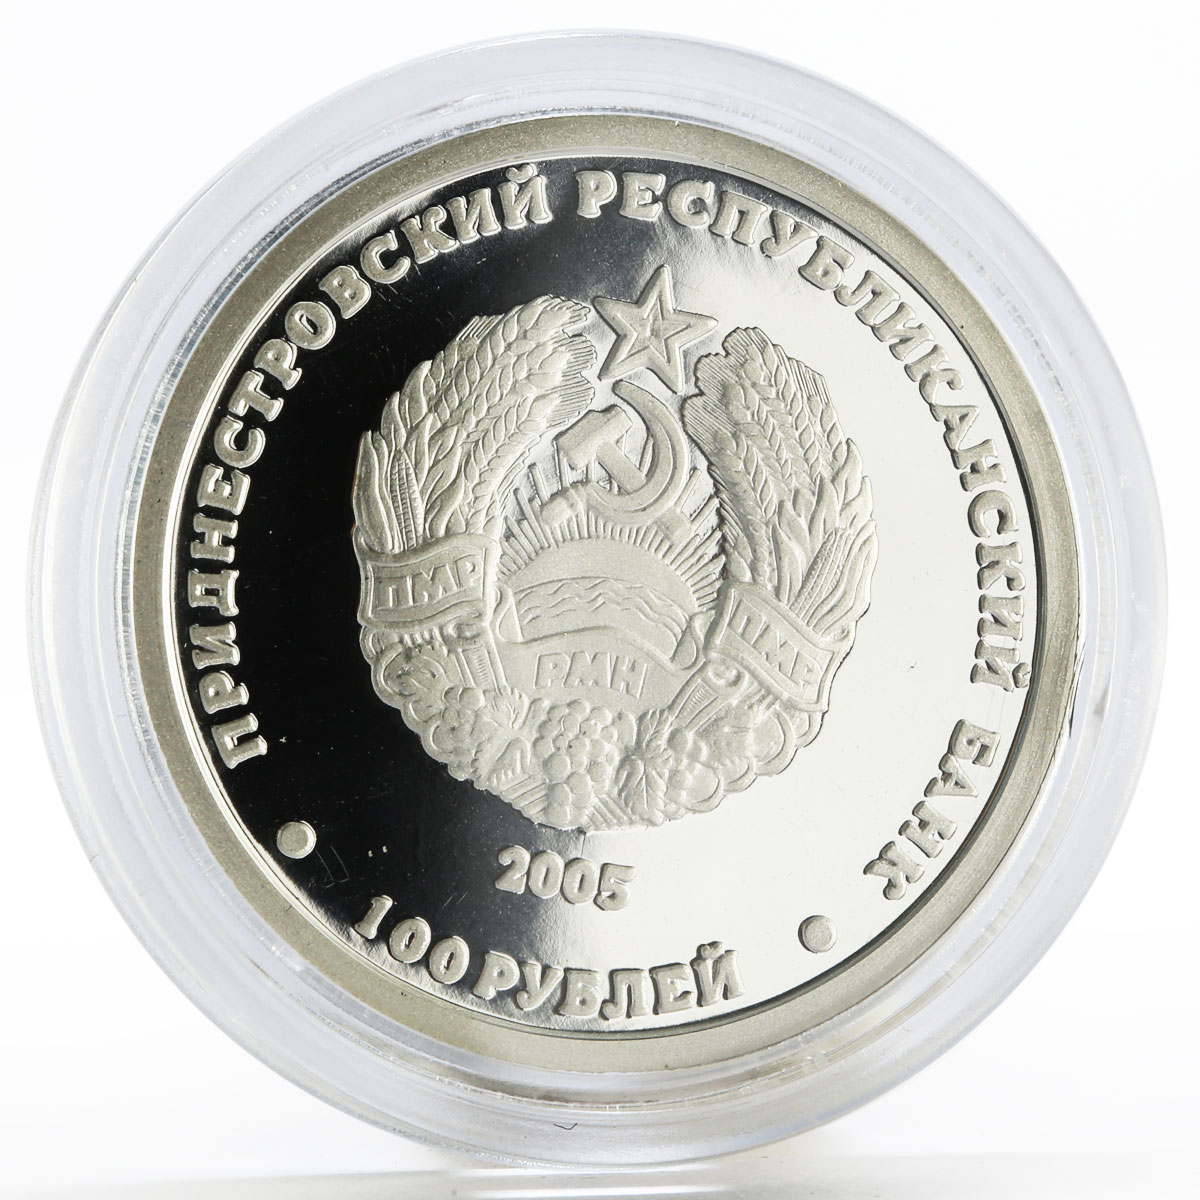 Transnistria 100 rubles Famous Transnistrians P.P. Vershigora silver coin 2005